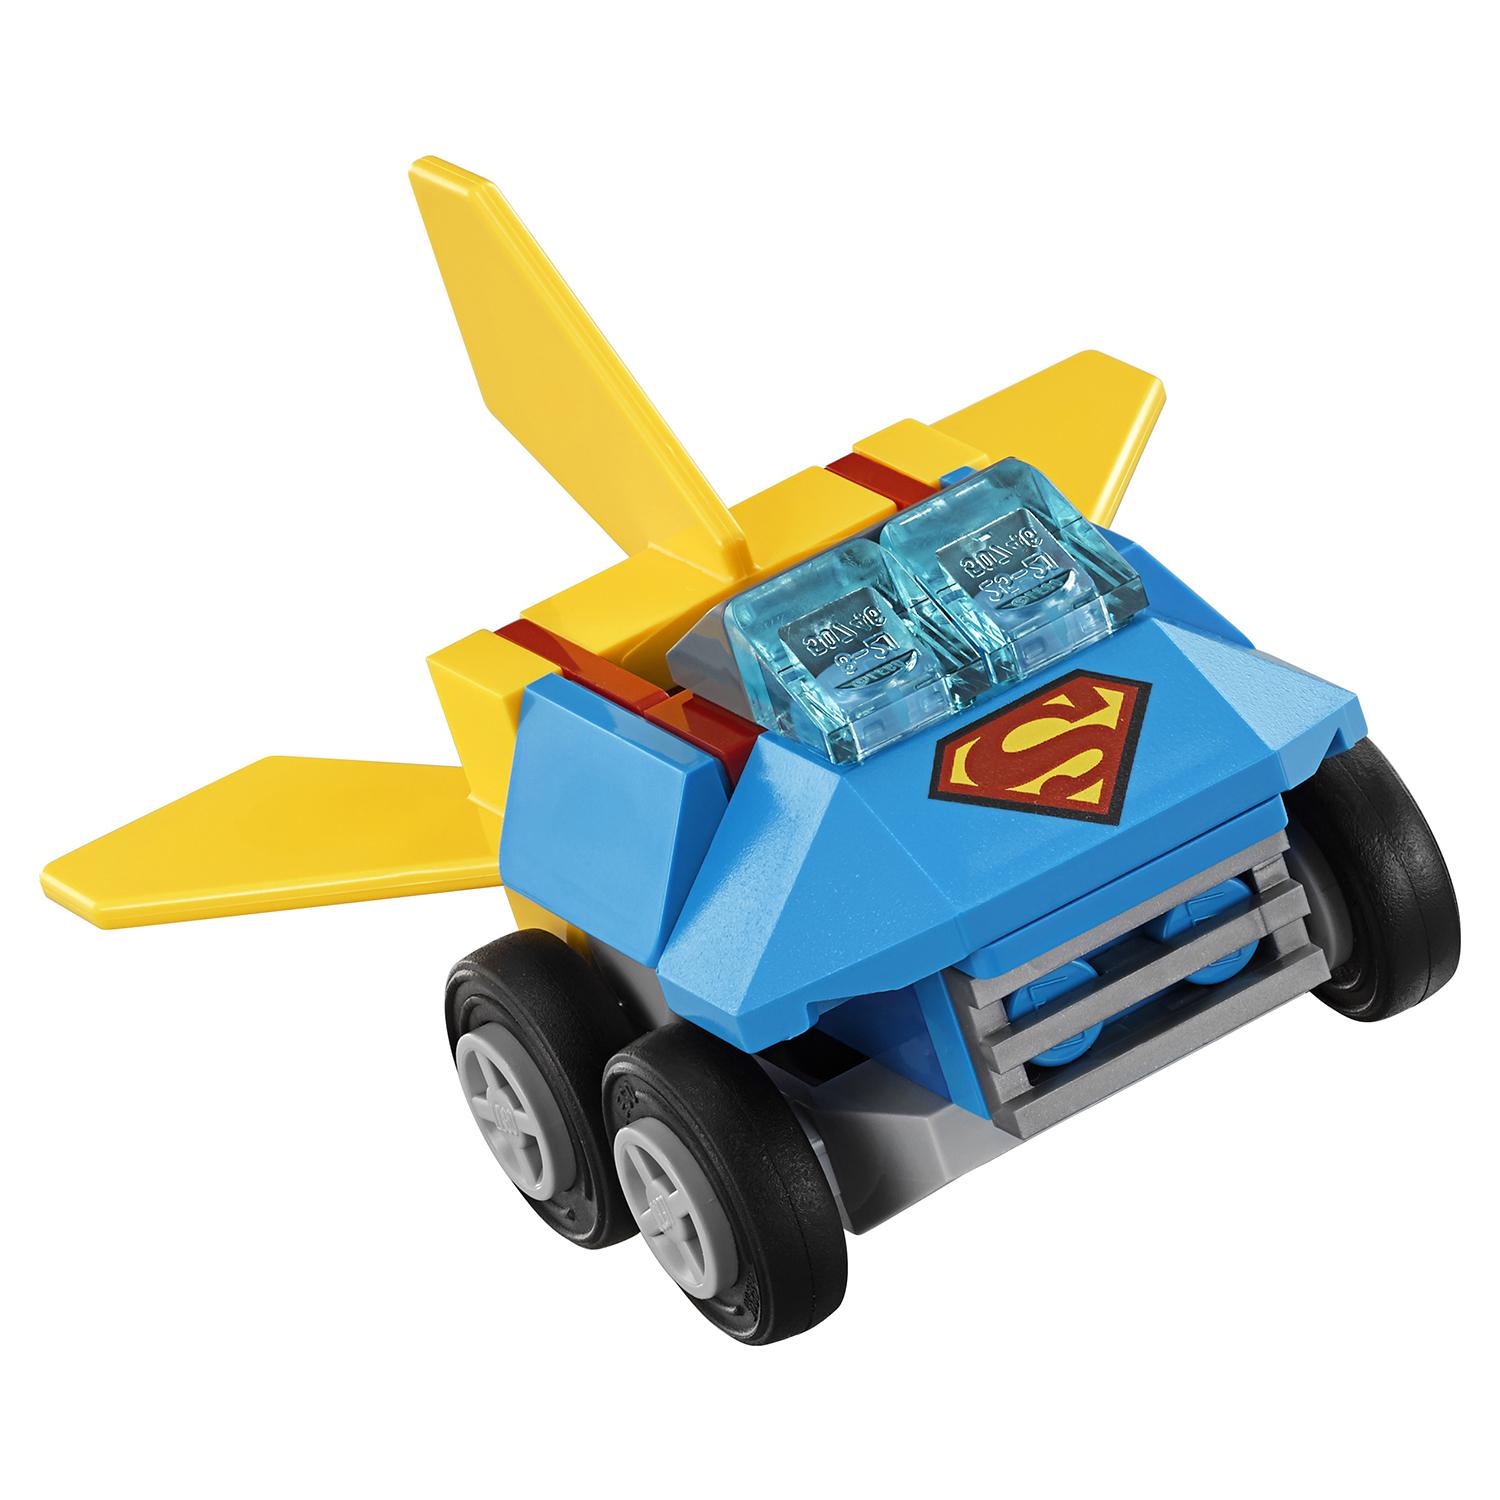 Lego Super Heroes 76094 Mighty Micros Супергёрл против Брейниака